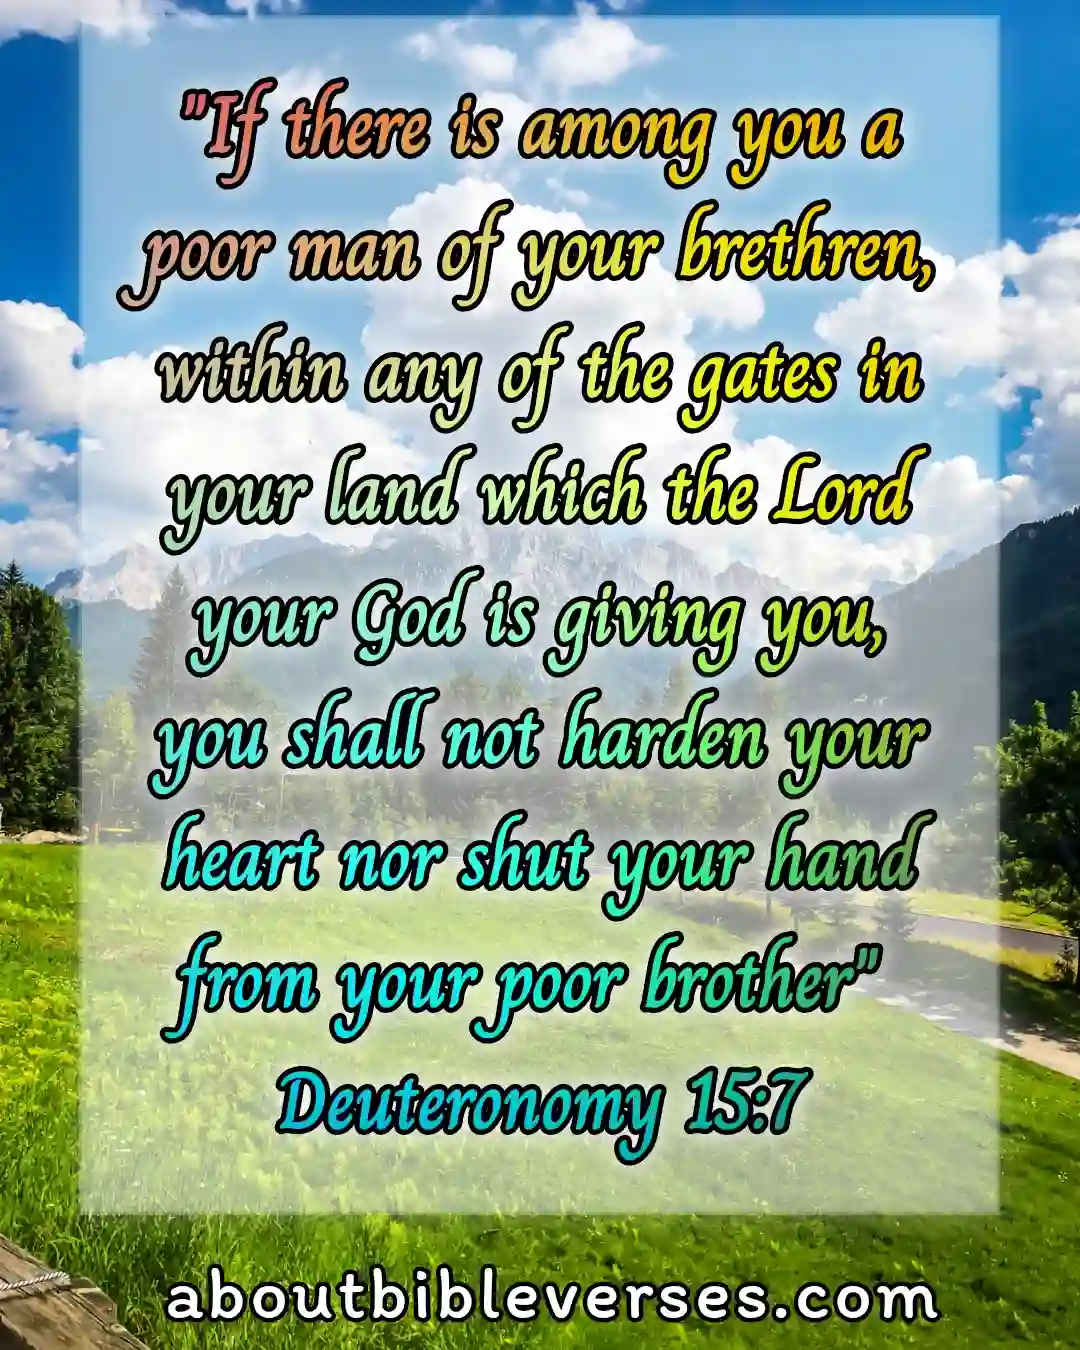 today bible verse (Deuteronomy 15:7)